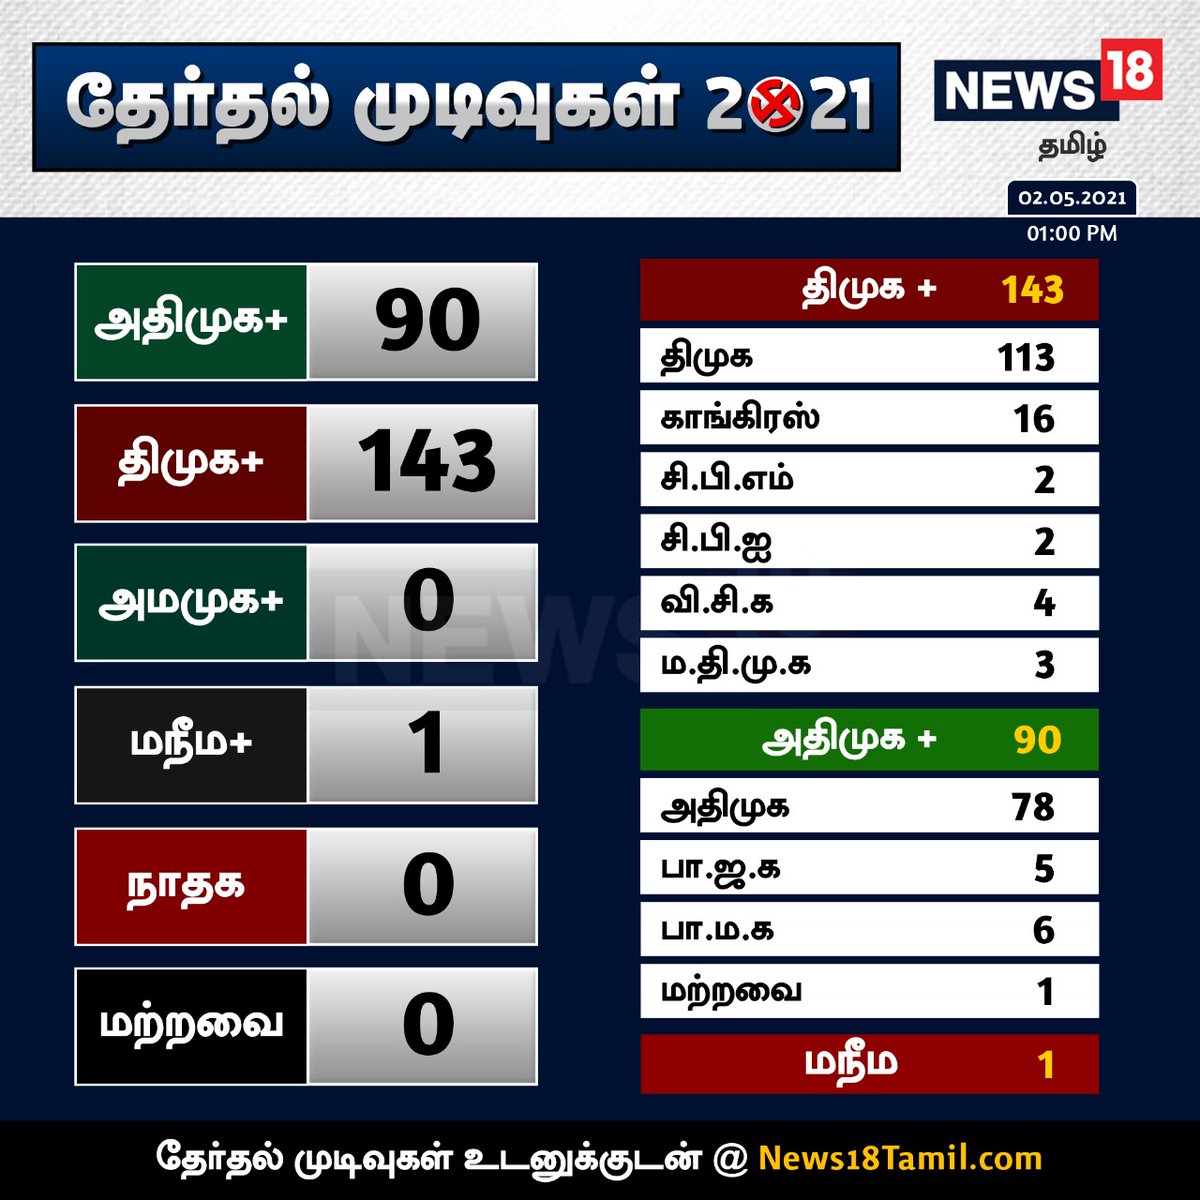 Leading update:
DMK-143
ADMK - 90 #TNElections2021 #TNAssemblyElection2021